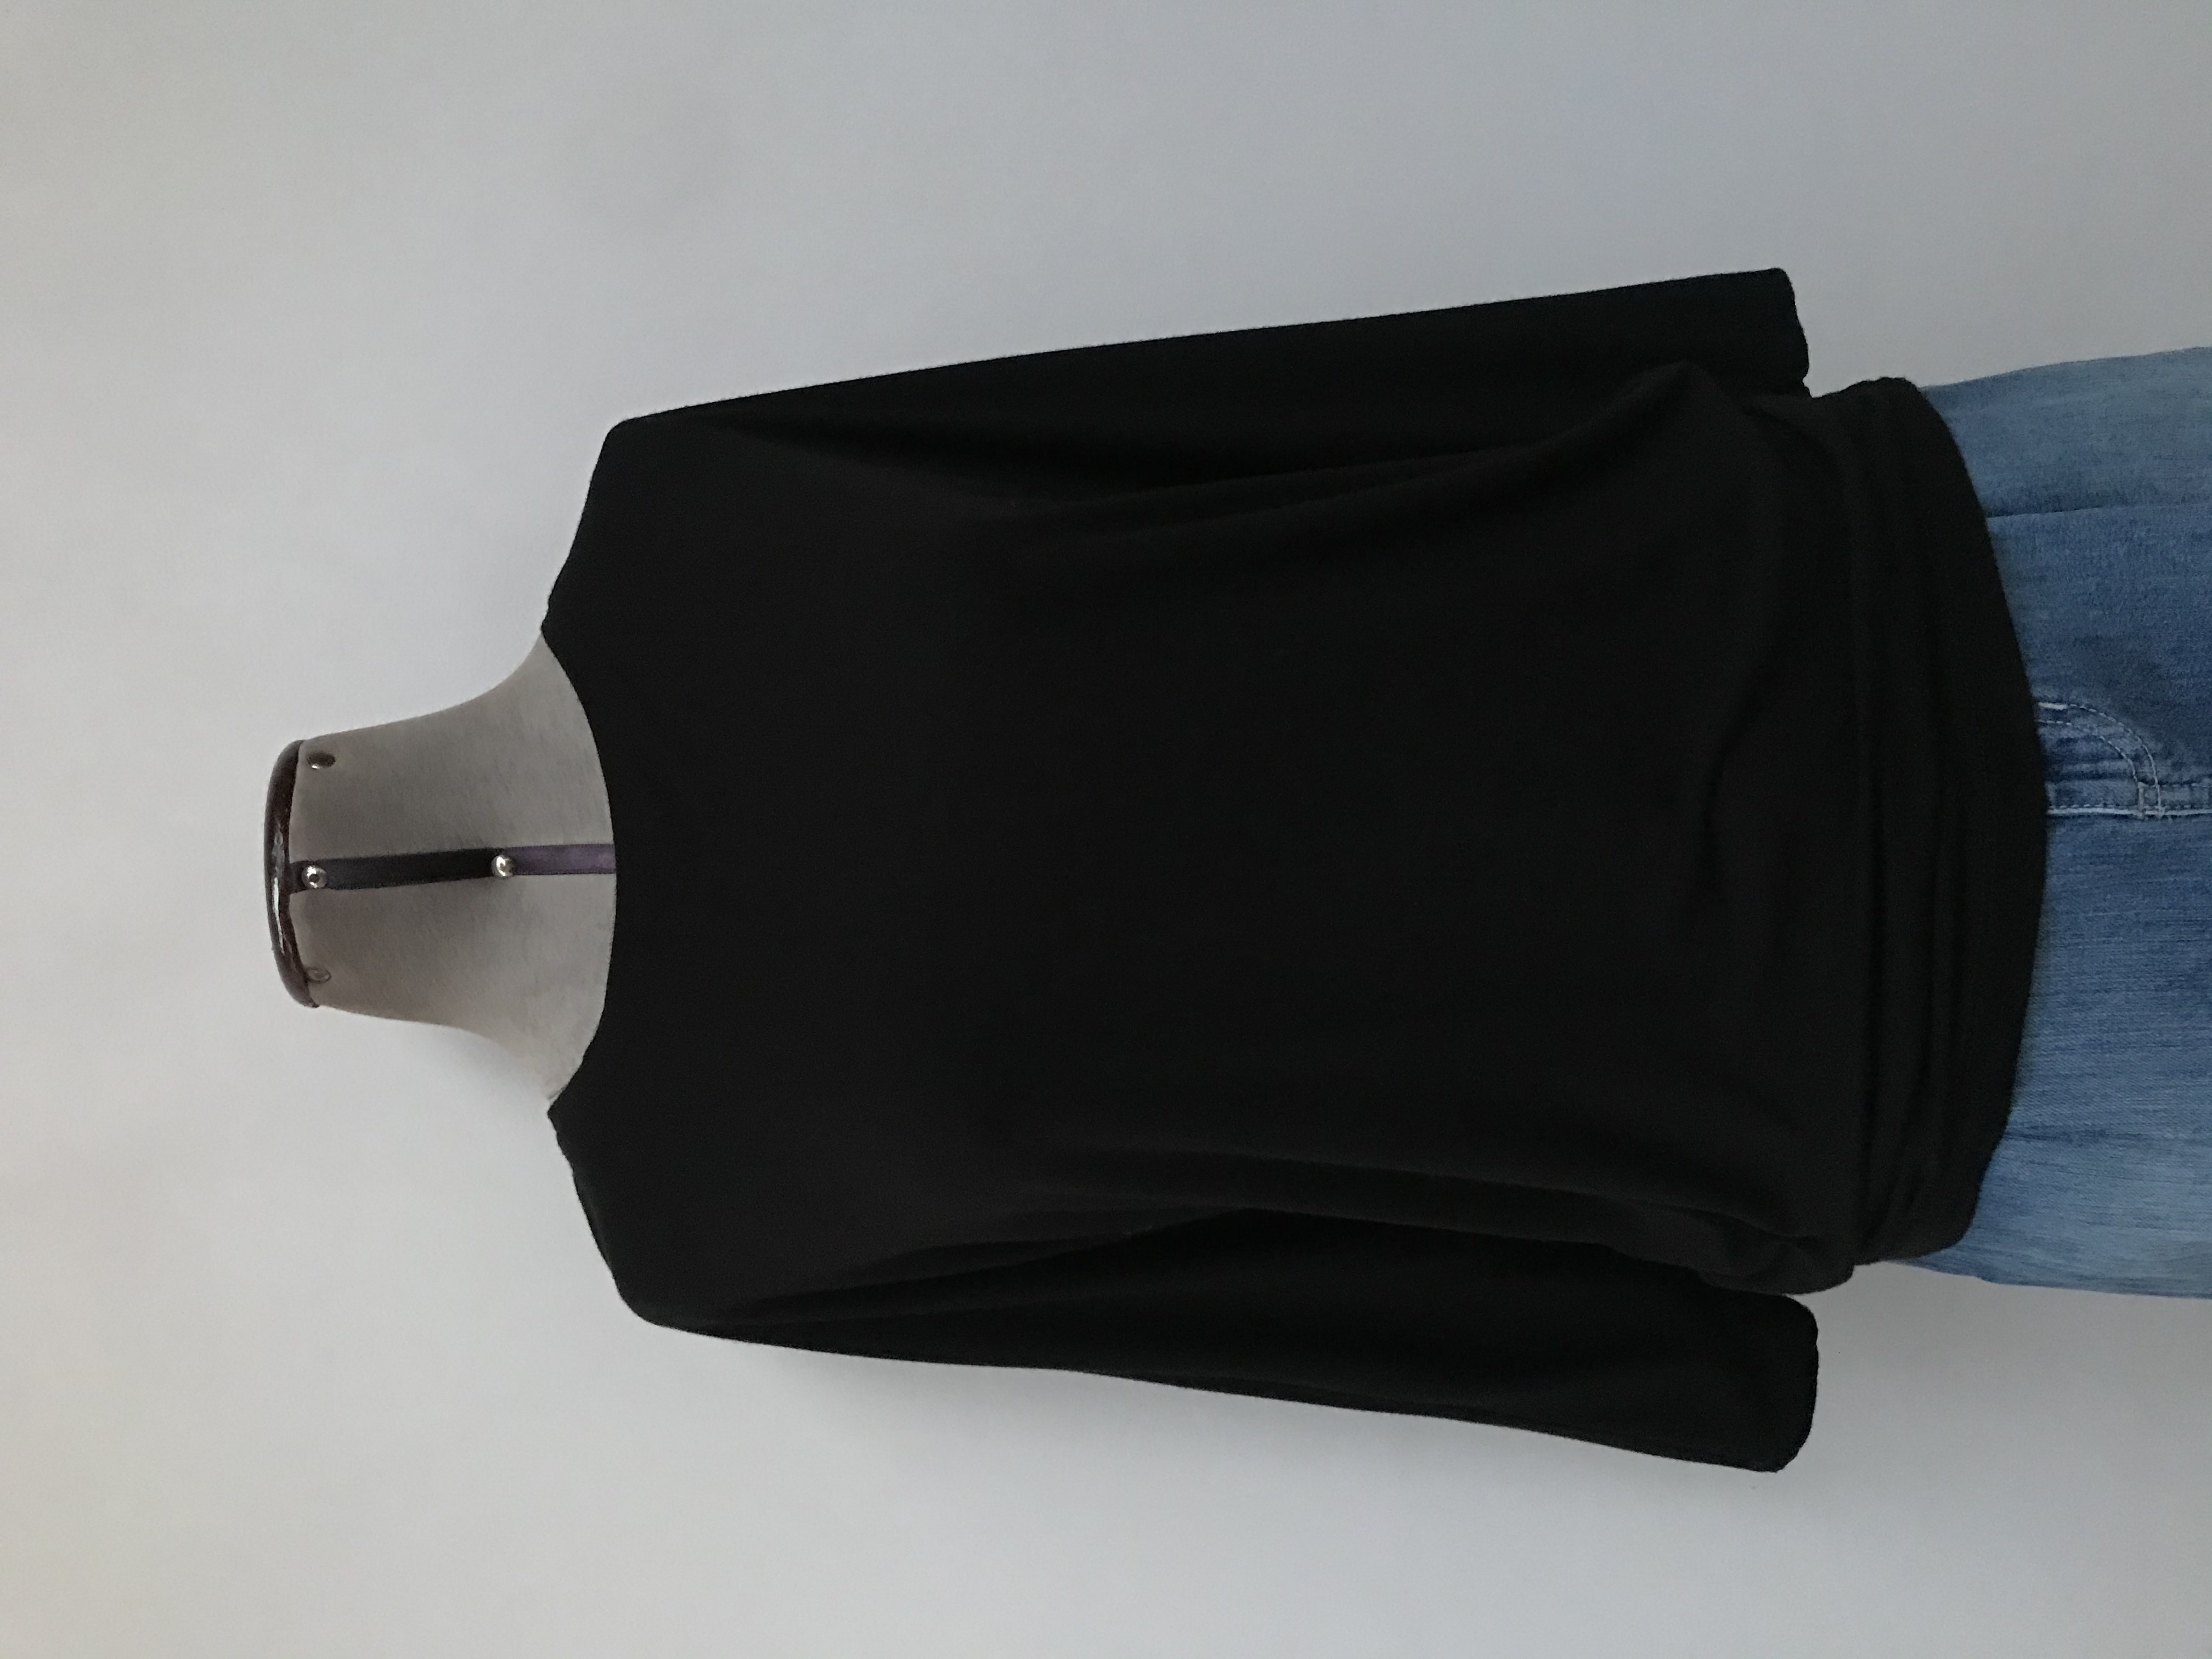 Polo Kenar negro 95% modal 5% spandex, manga murciélago 3/4, tela rica al tacto con linda caída. Precio original S/180
Talla M